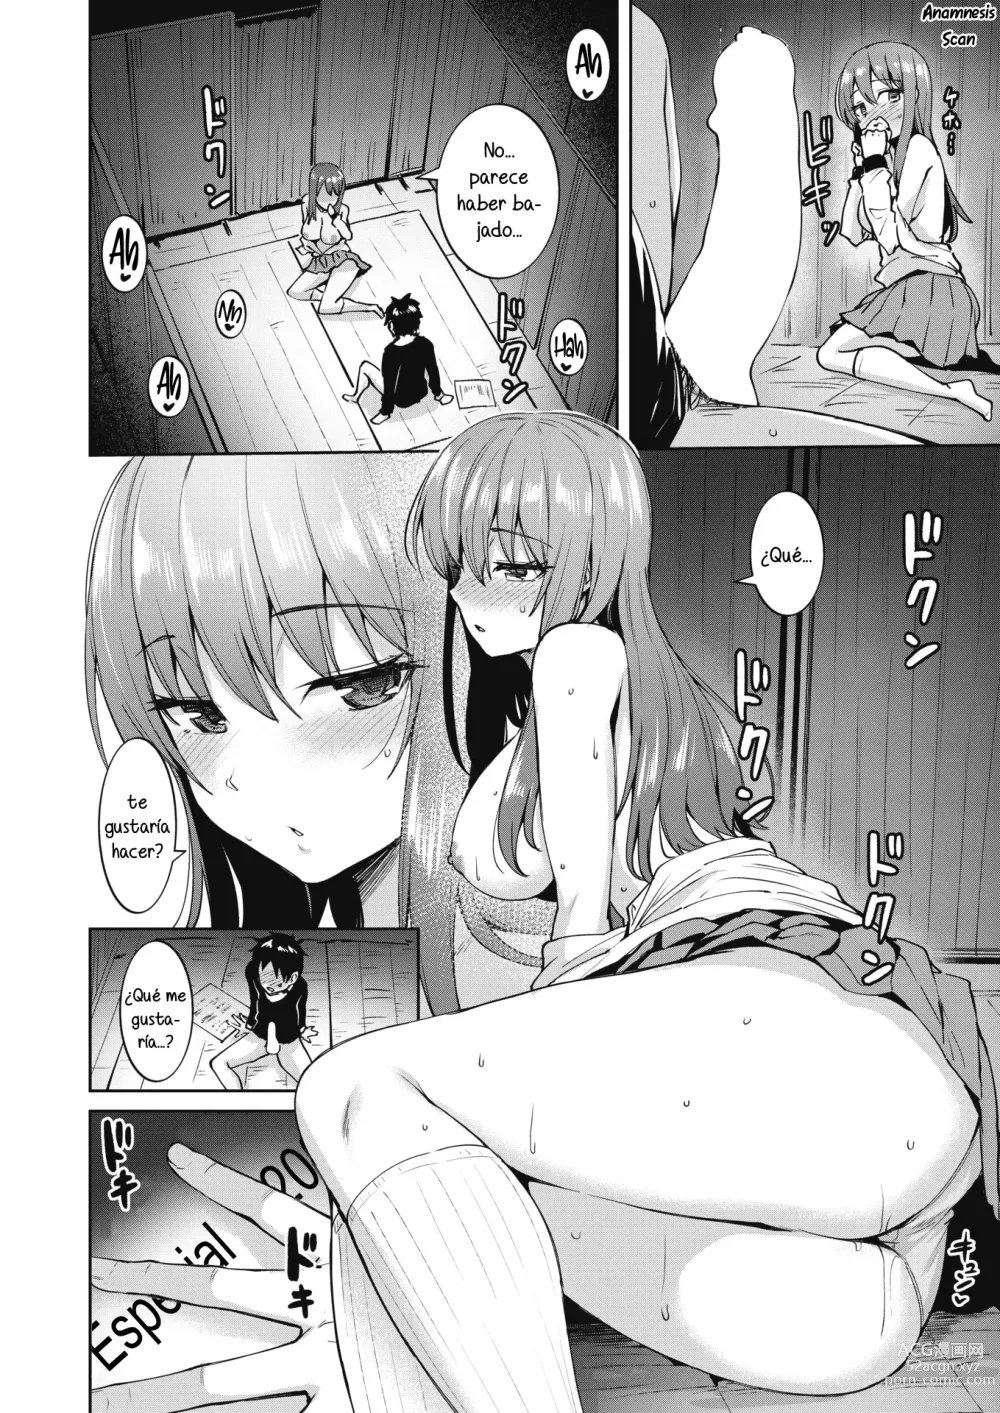 Page 16 of manga Dore ni Suru? - Which ecstasy do you want?